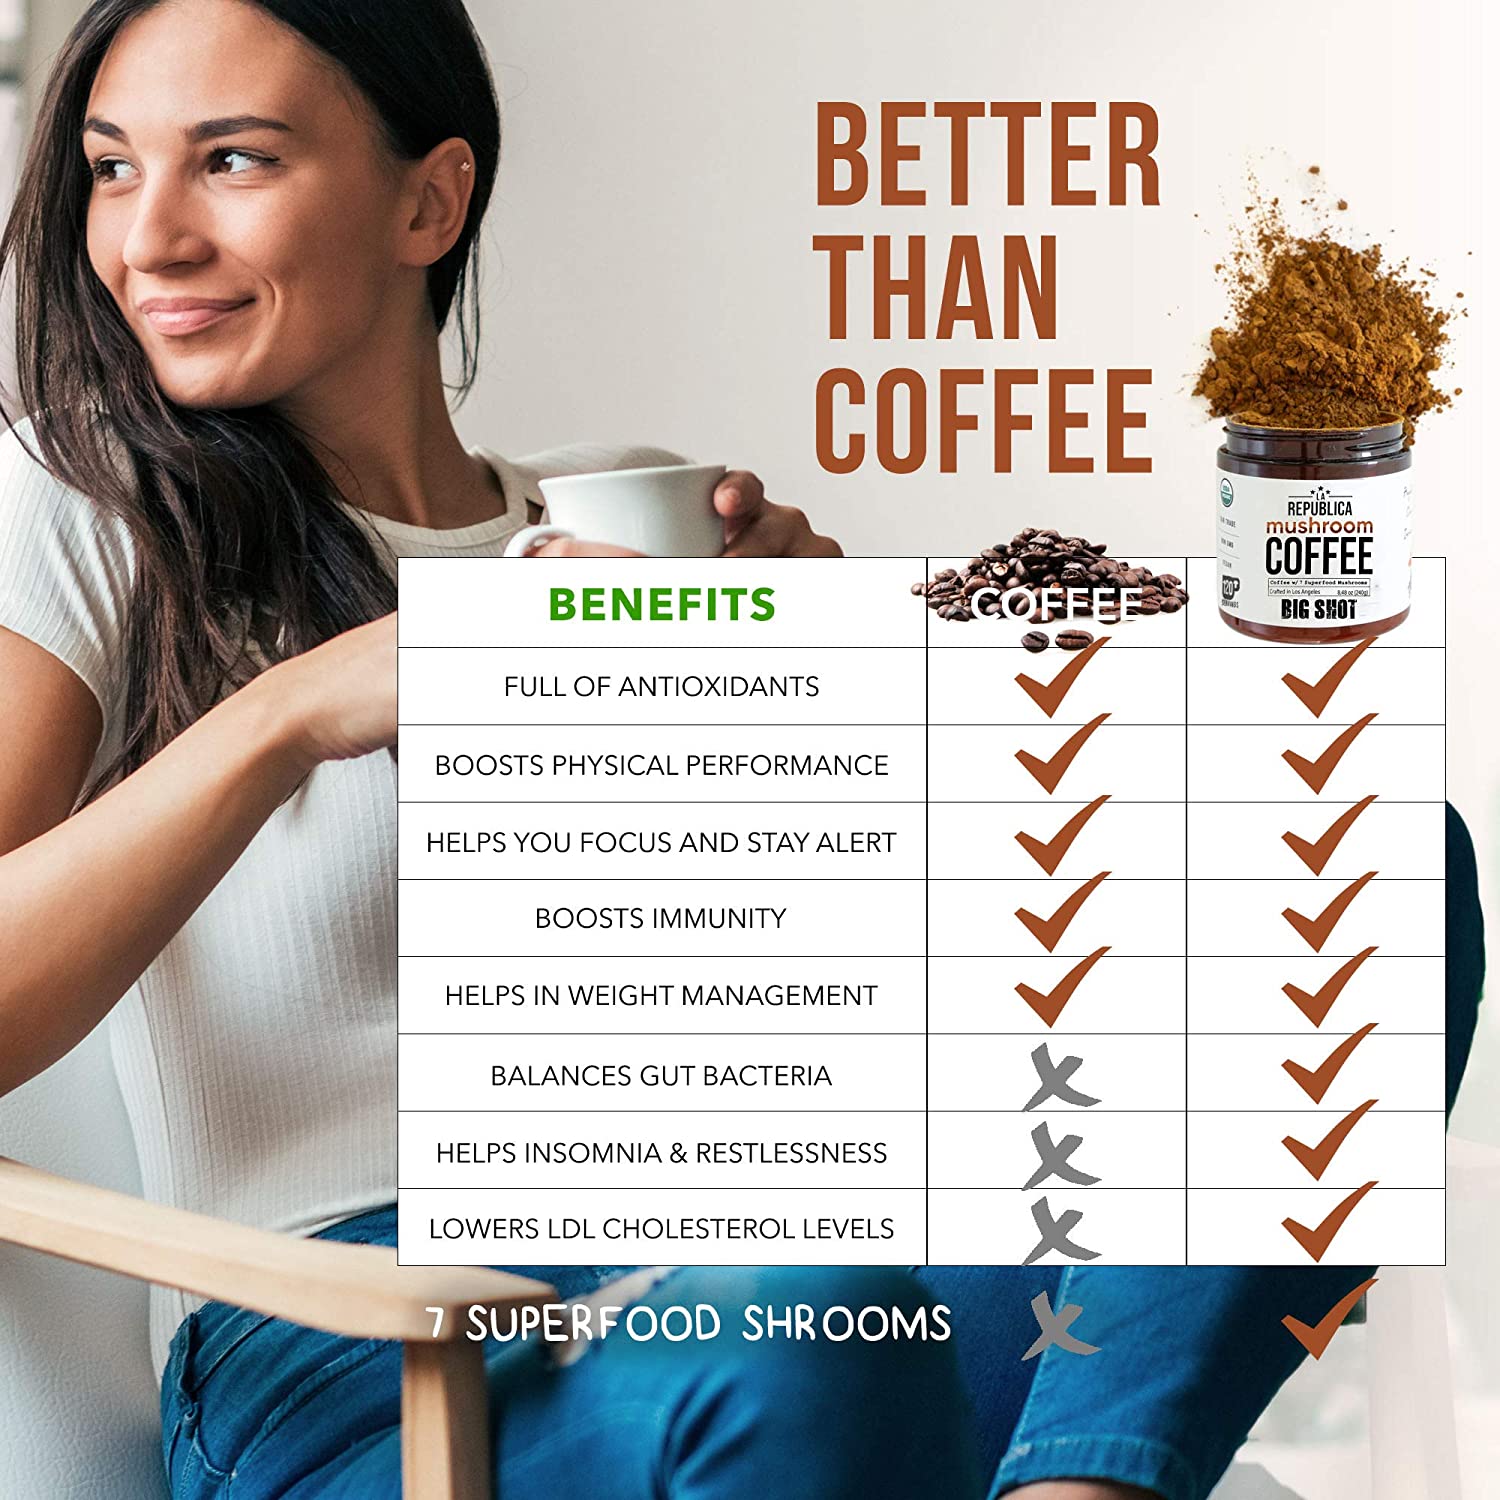 La Republica BIG SHOT Organic Mushroom Coffee with 7 Superfood Mushrooms • 4x BIGGER * New 100% Compostable Bag! - Multiverse